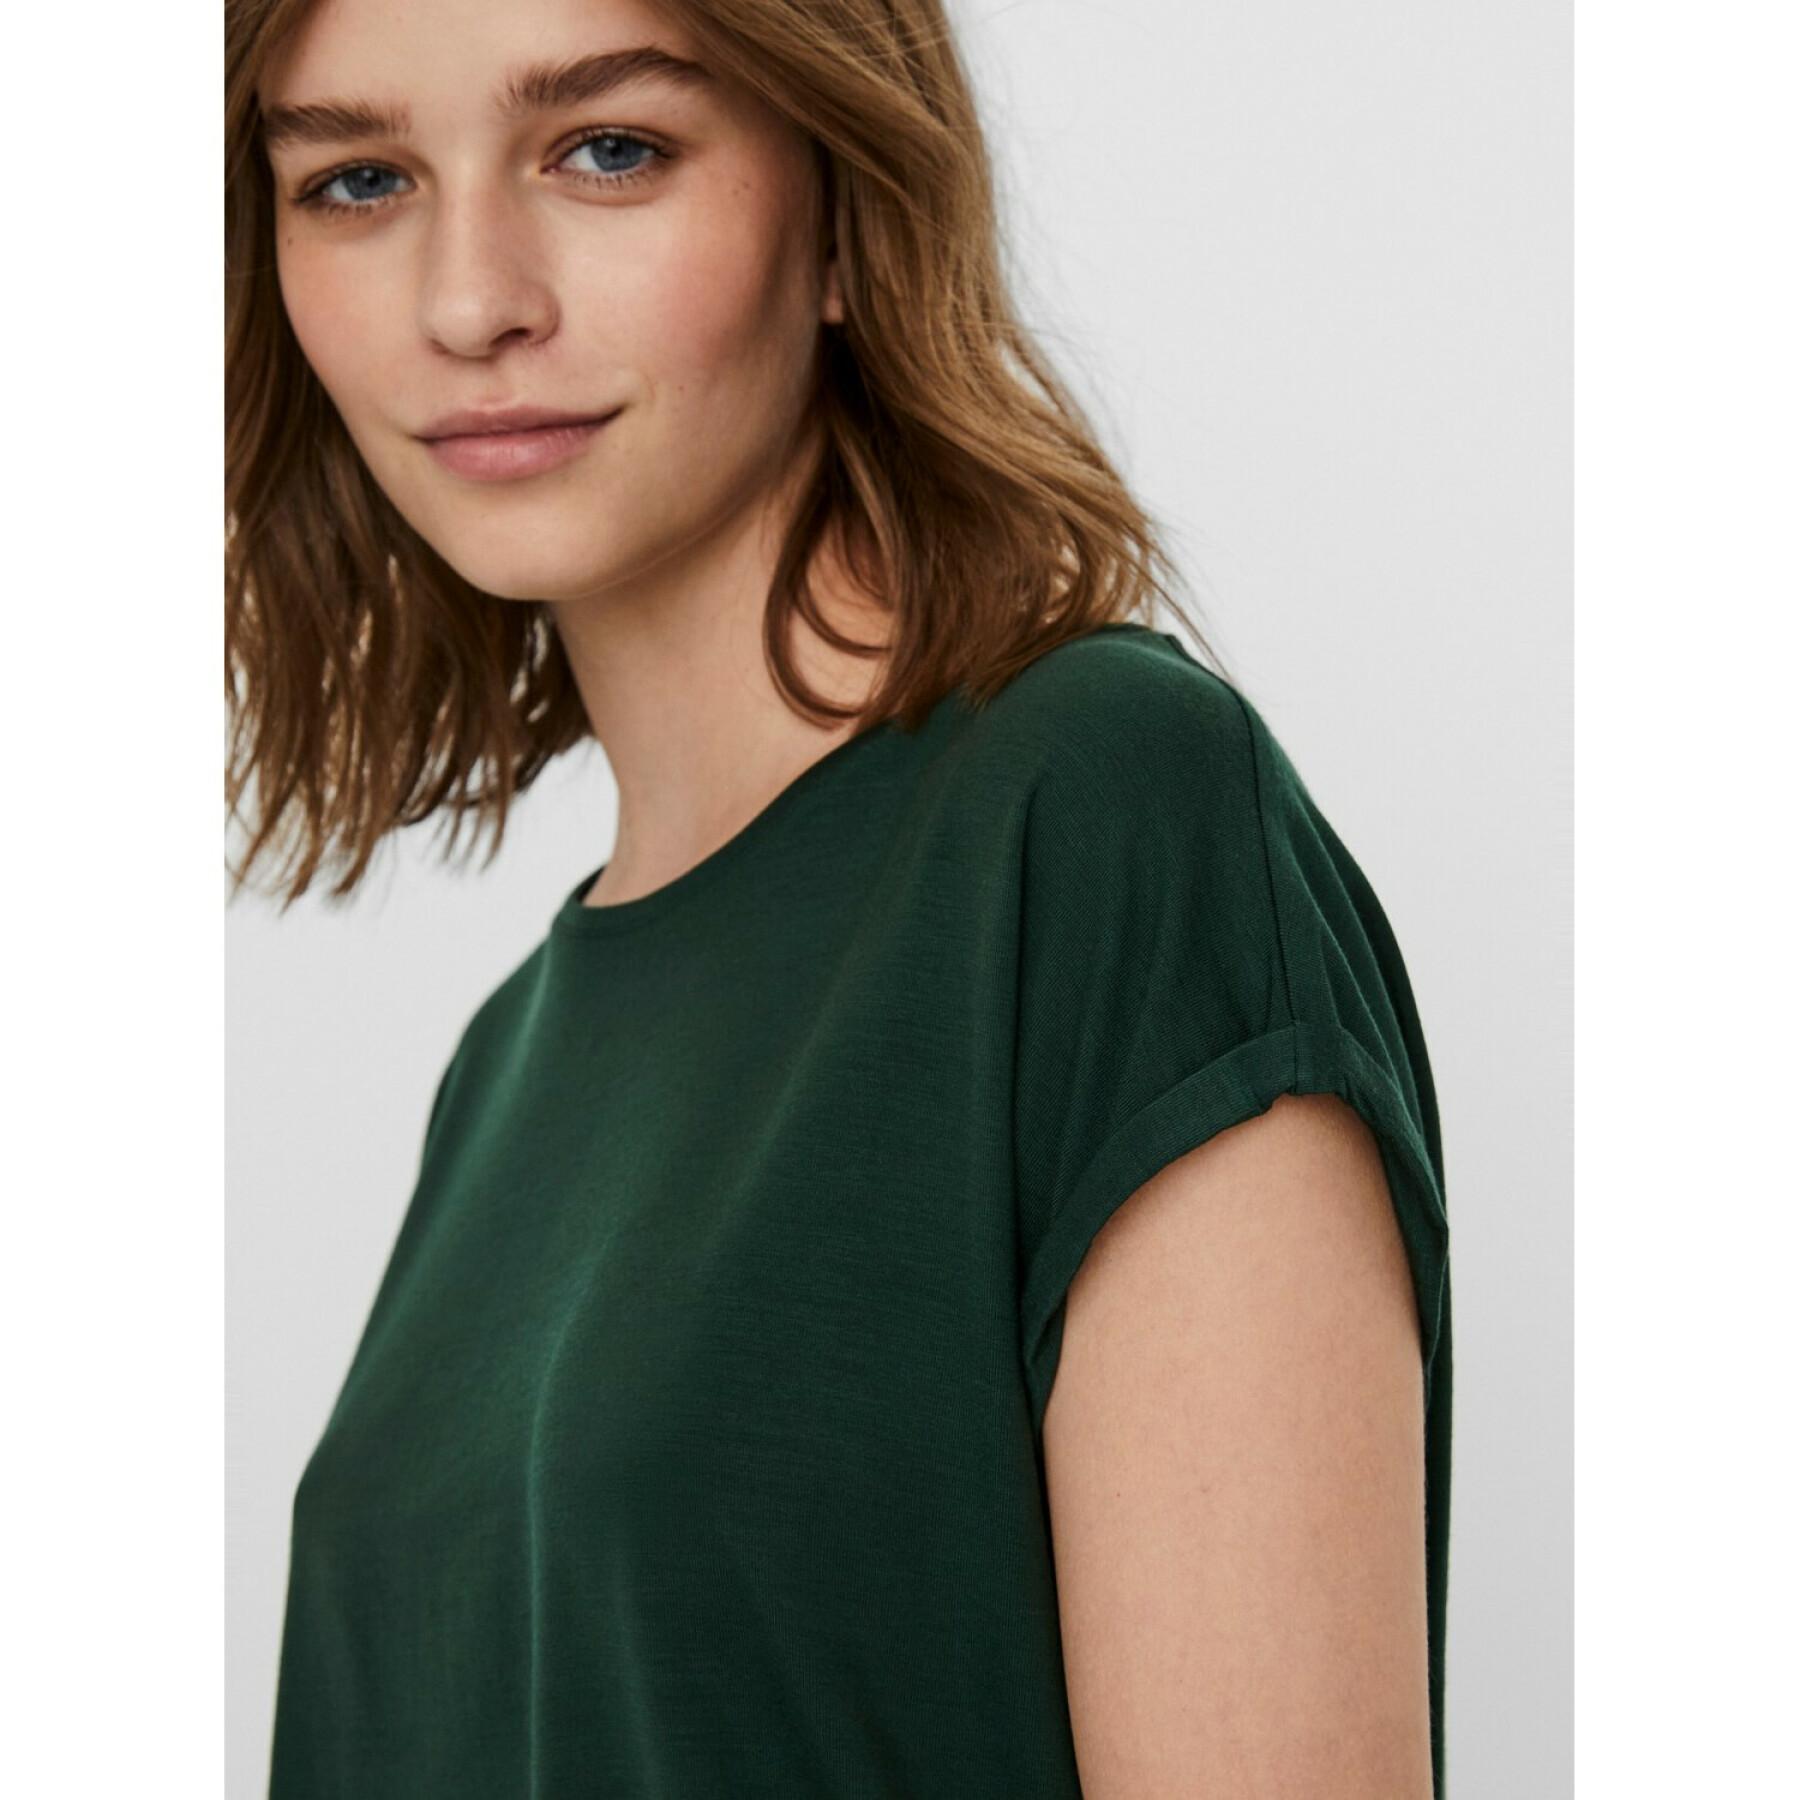 Camiseta feminina Vero Moda vmava